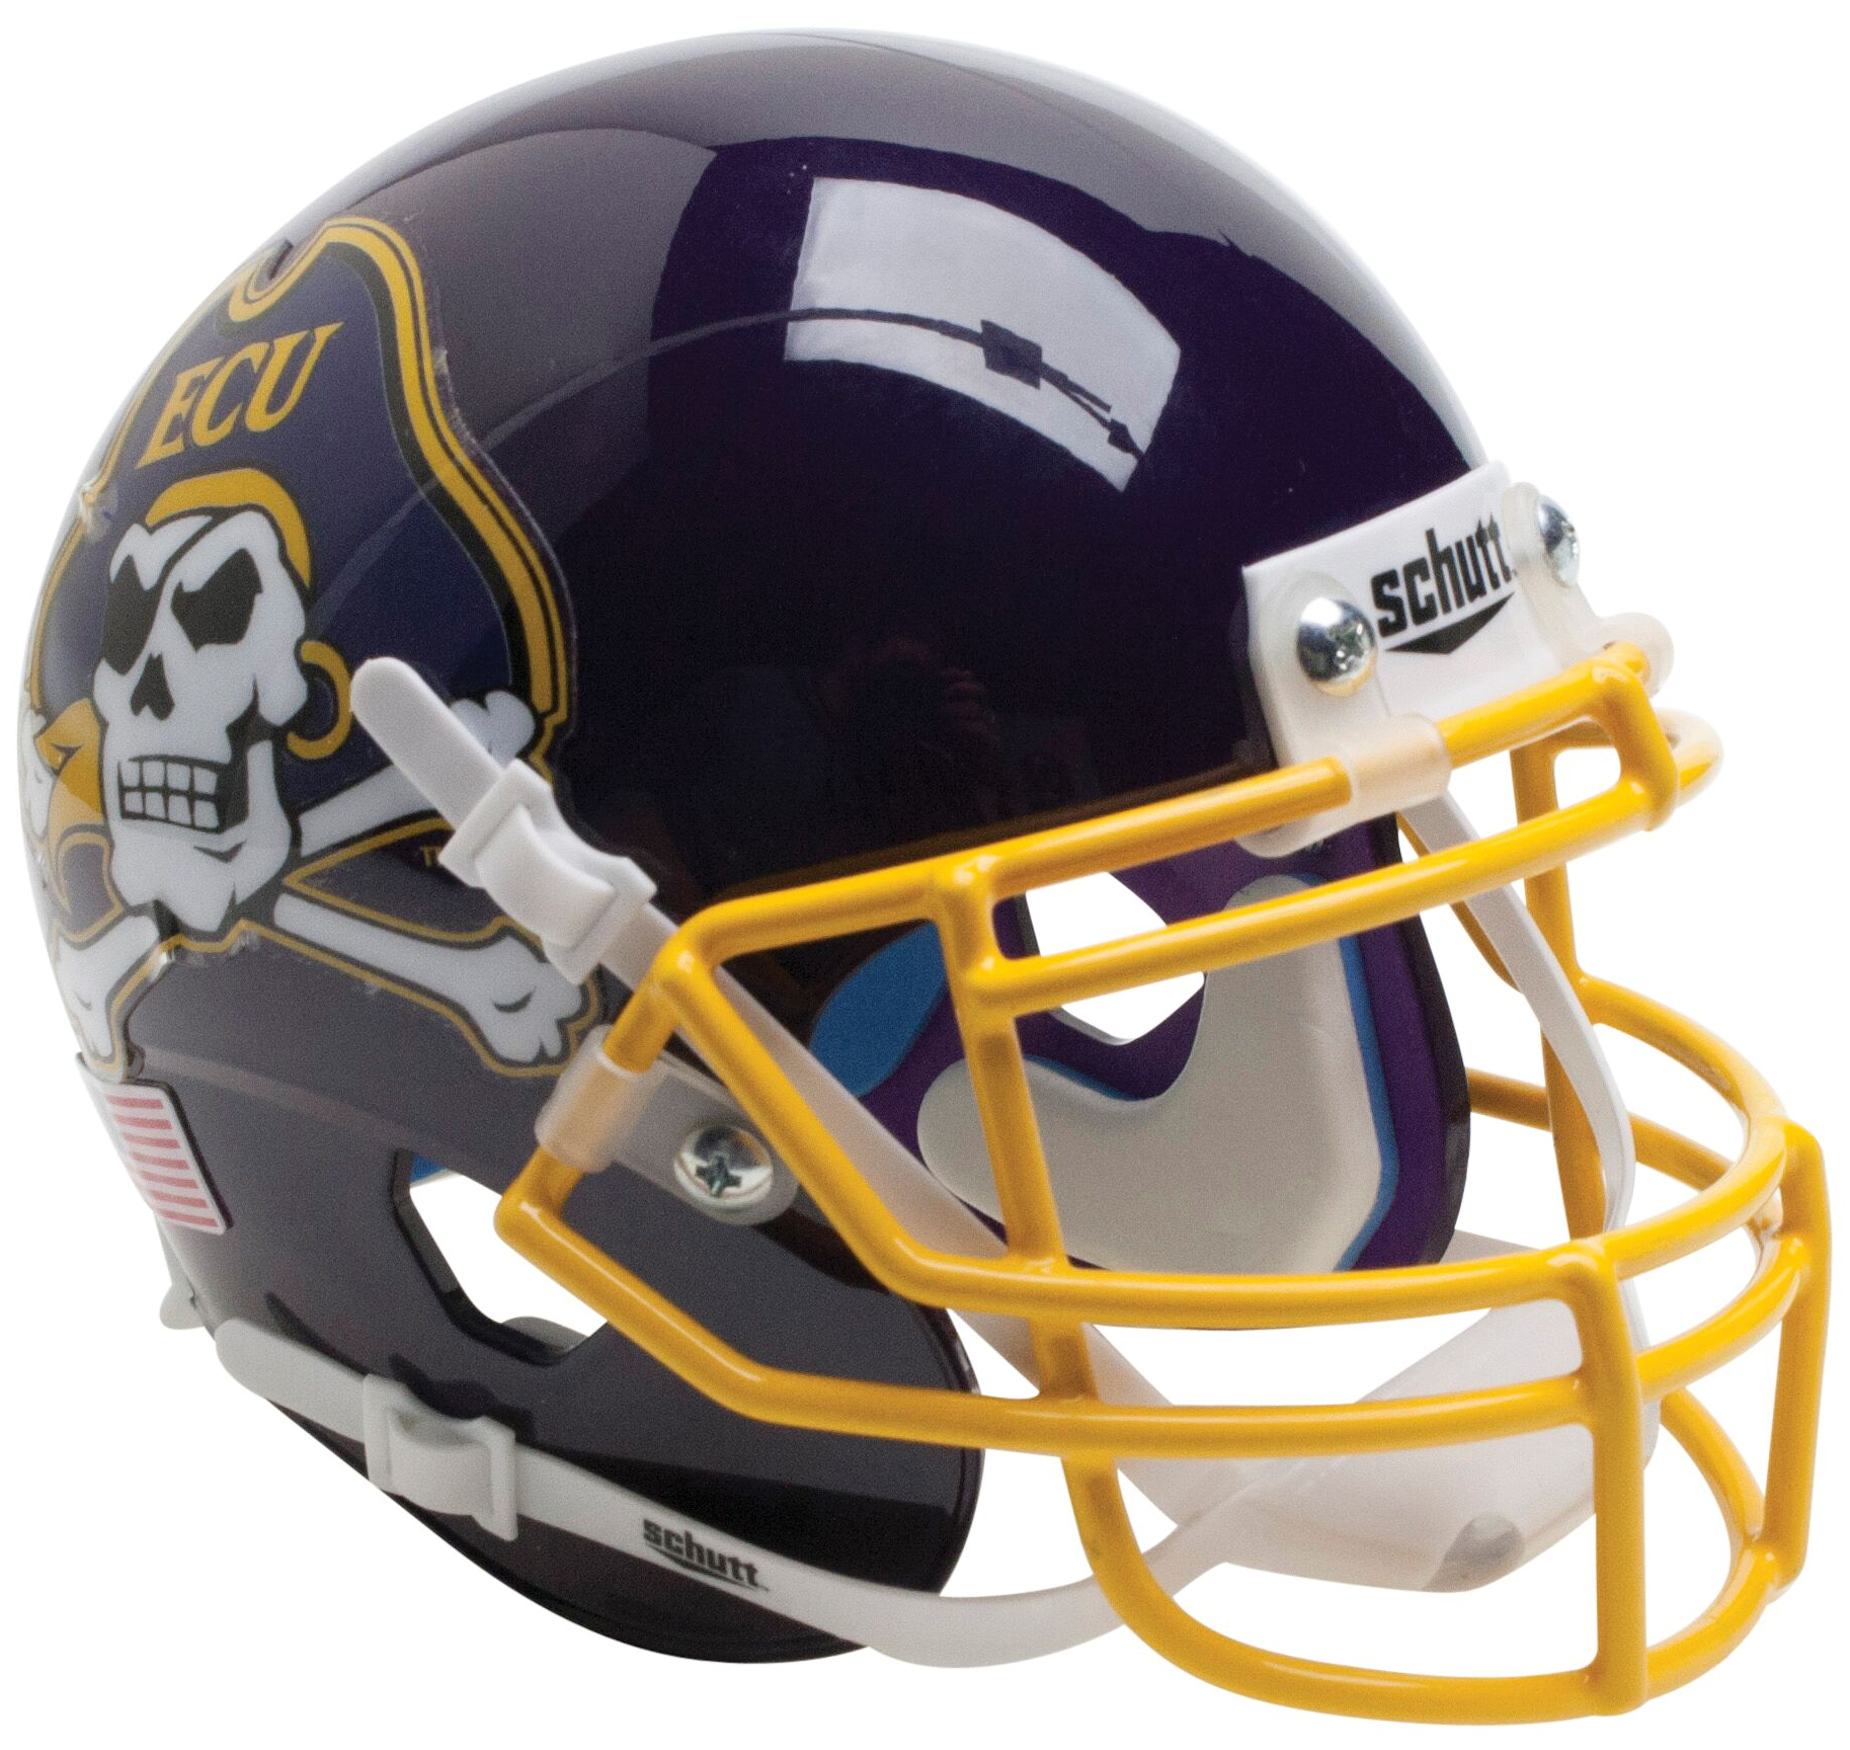 East Carolina Pirates Mini XP Authentic Helmet Schutt <B>Yellow Mask</B>